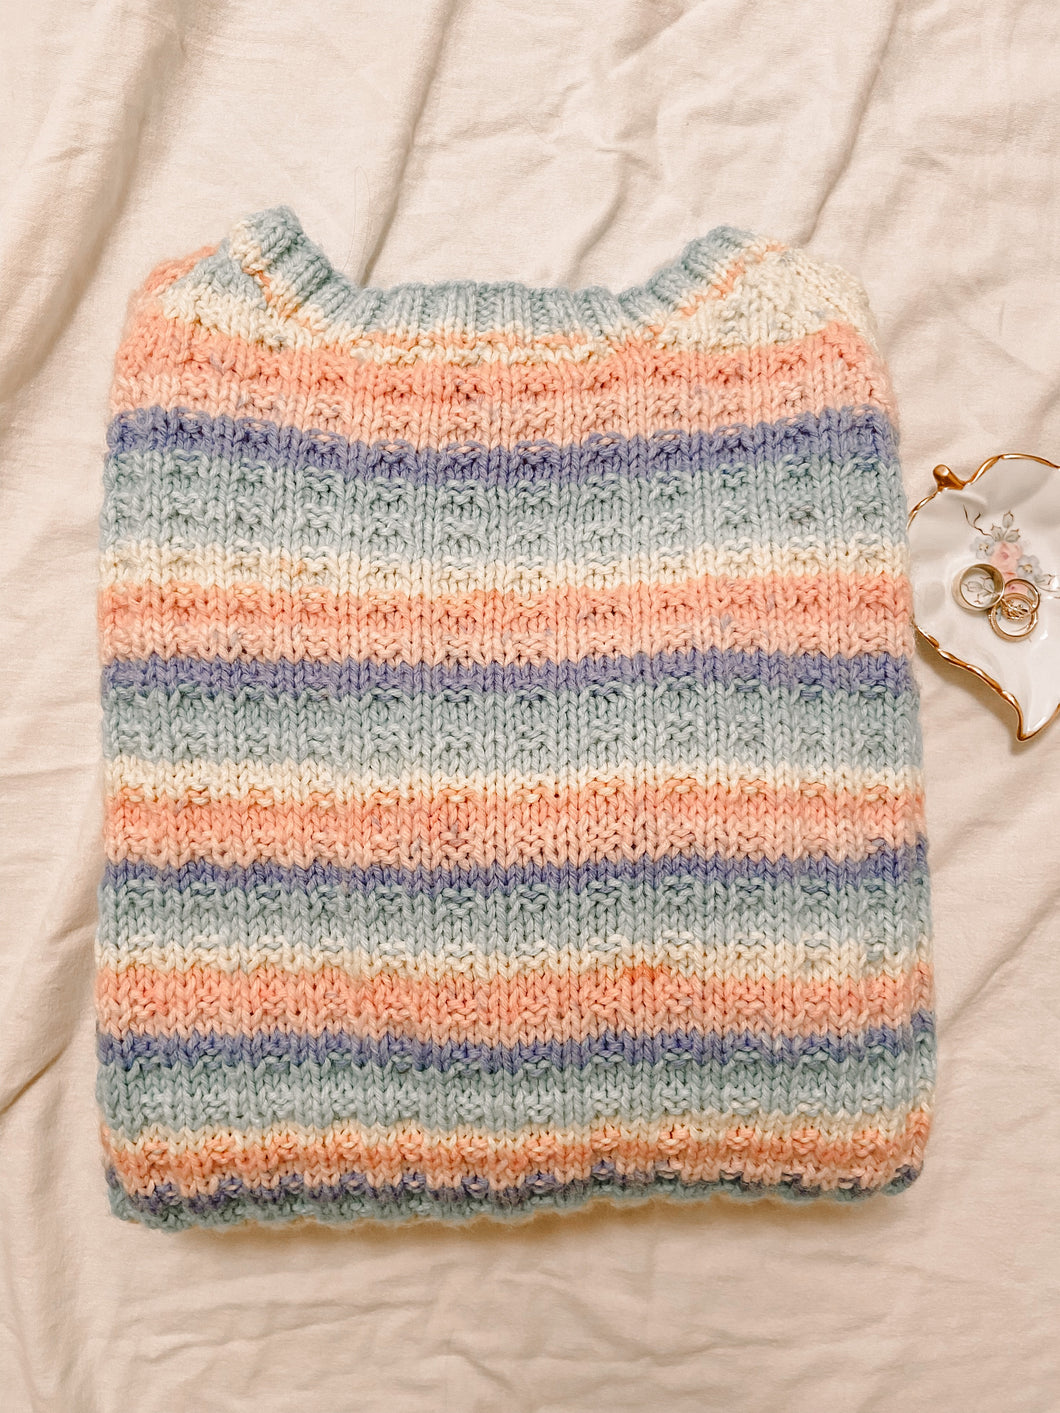 Rainbow Crochet Sweater